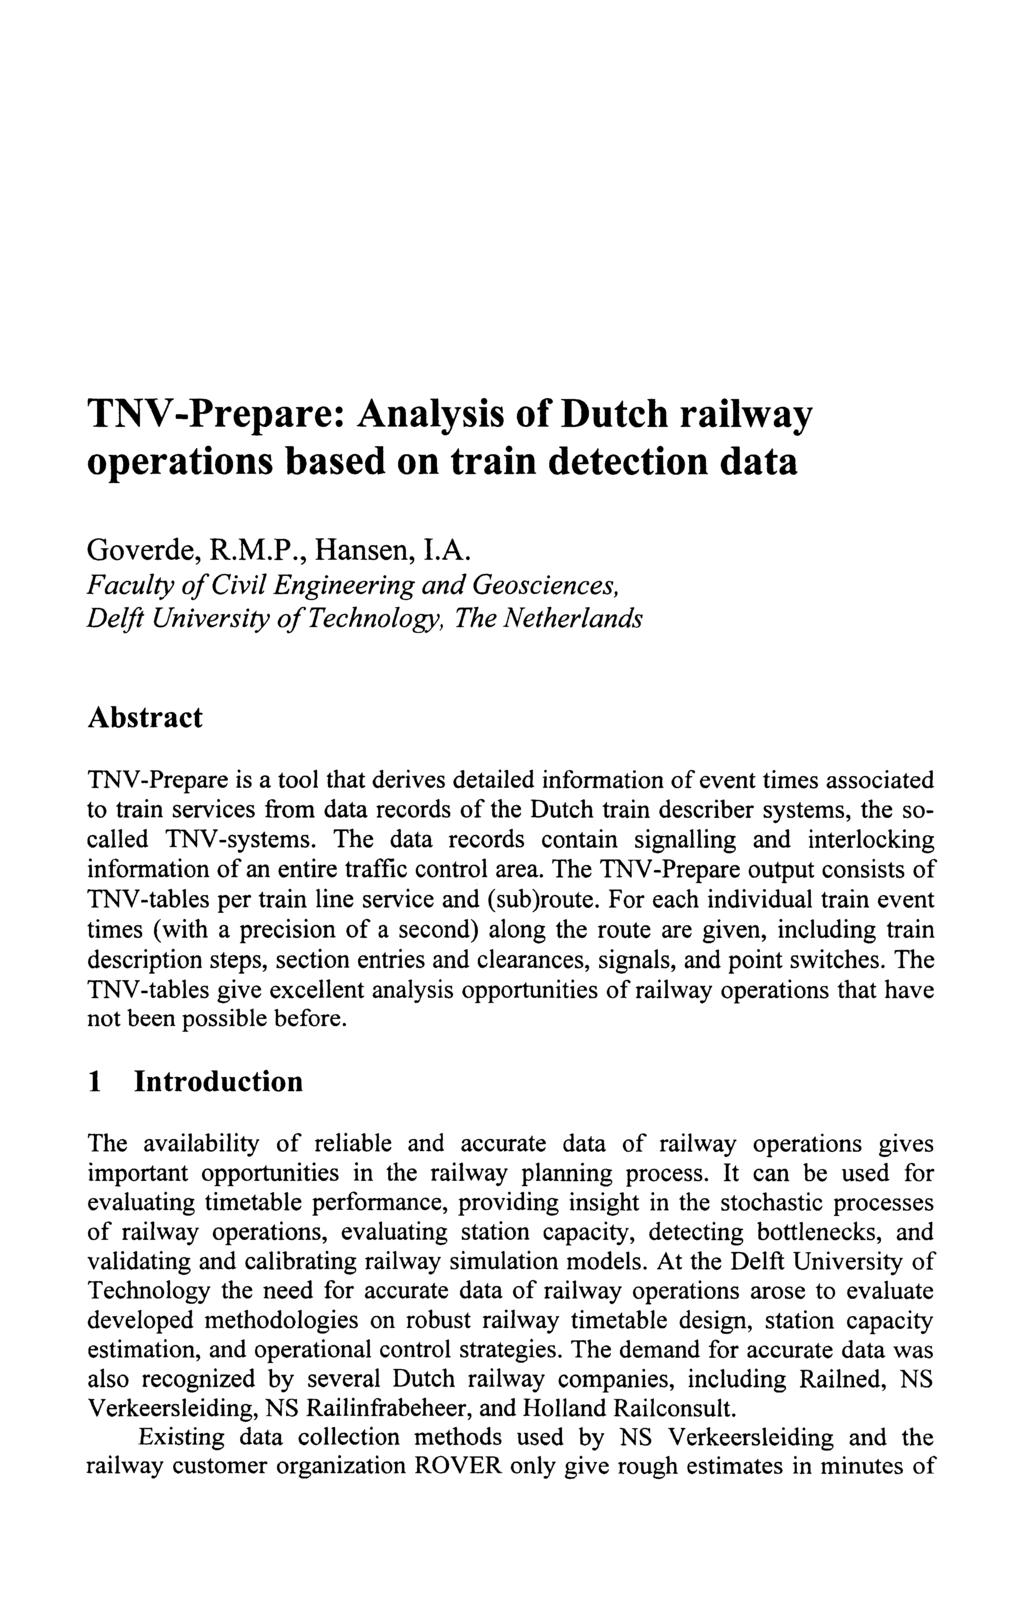 TNV-Prepare: Analysis of Dutch railway operations based on train detection data Goverde, R.M.P., Hansen, LA.